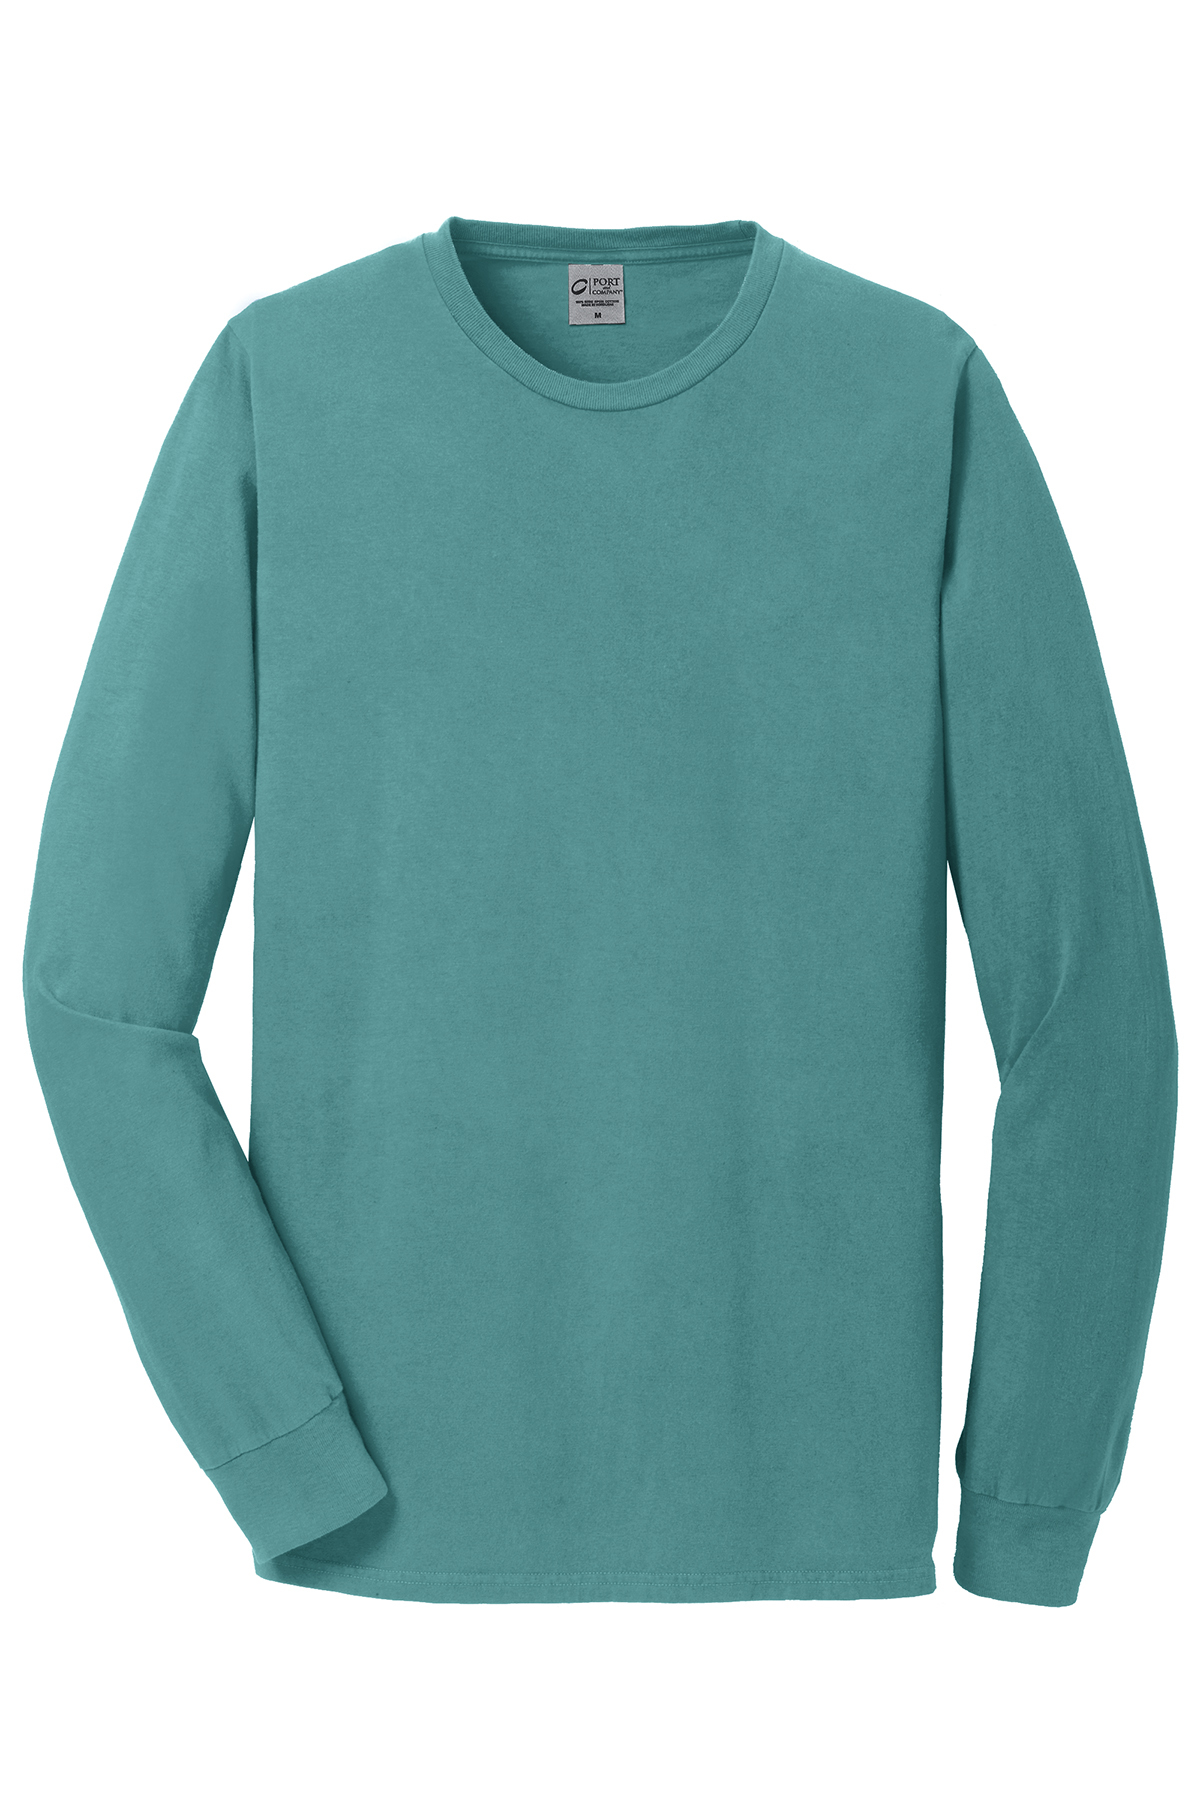 Port & Company Beach Wash Garment-Dyed Long Sleeve Tee | Product | Port ...